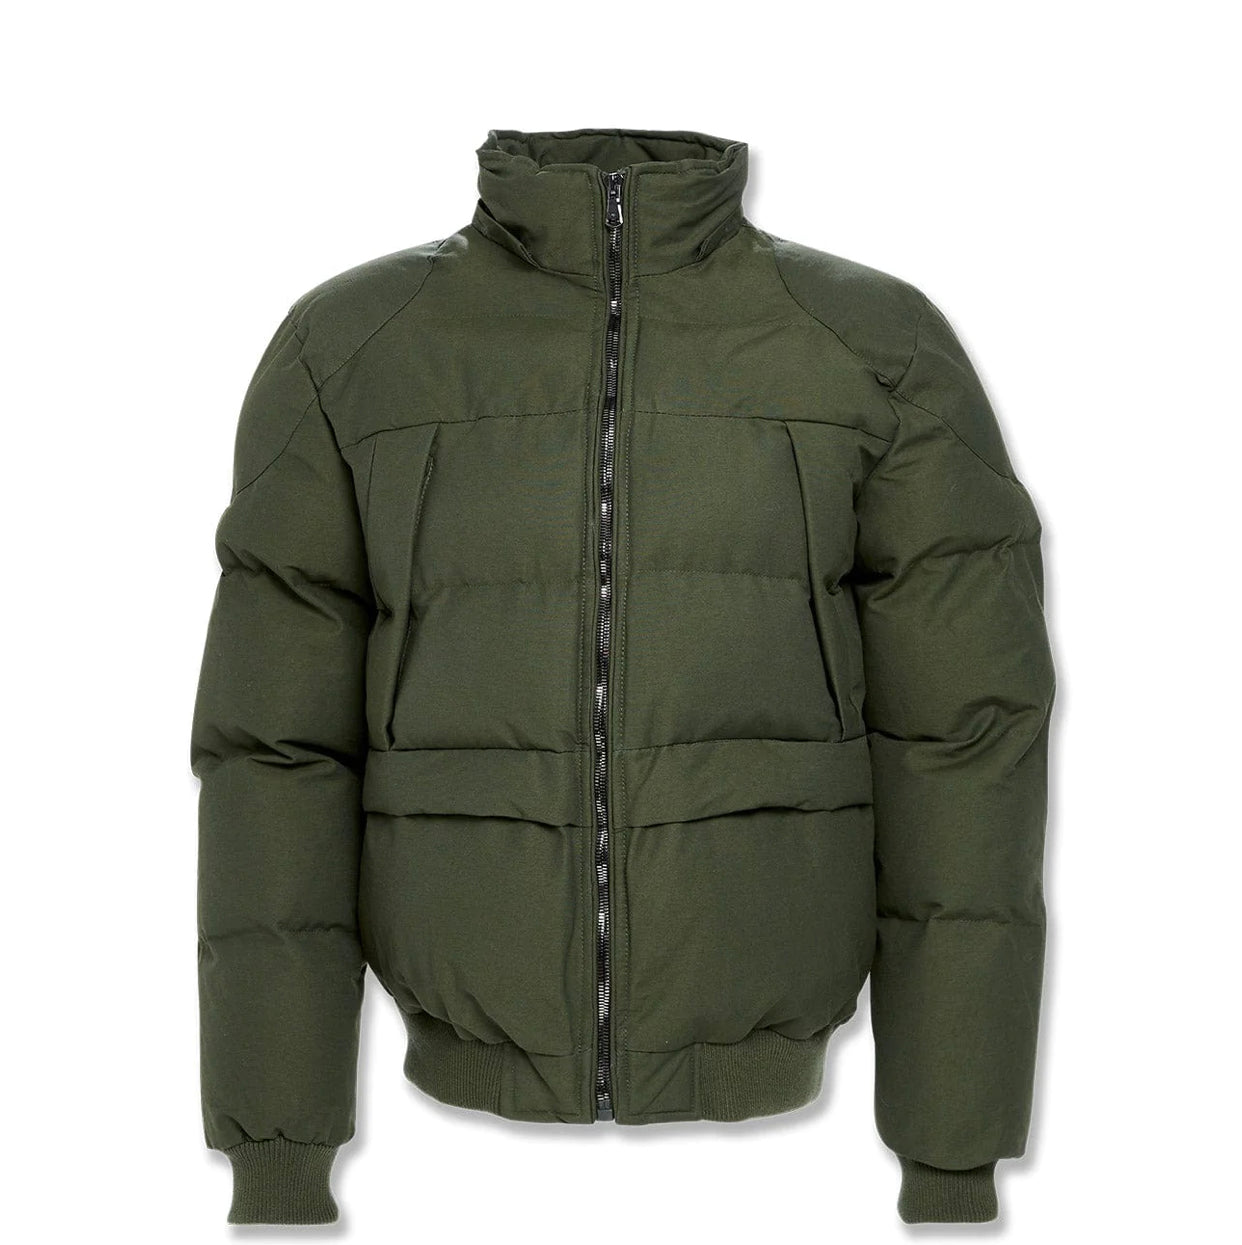 Jordan Craig Hollis  Canvas Puffer jacket w fur hood Army Green olive 91615 91541